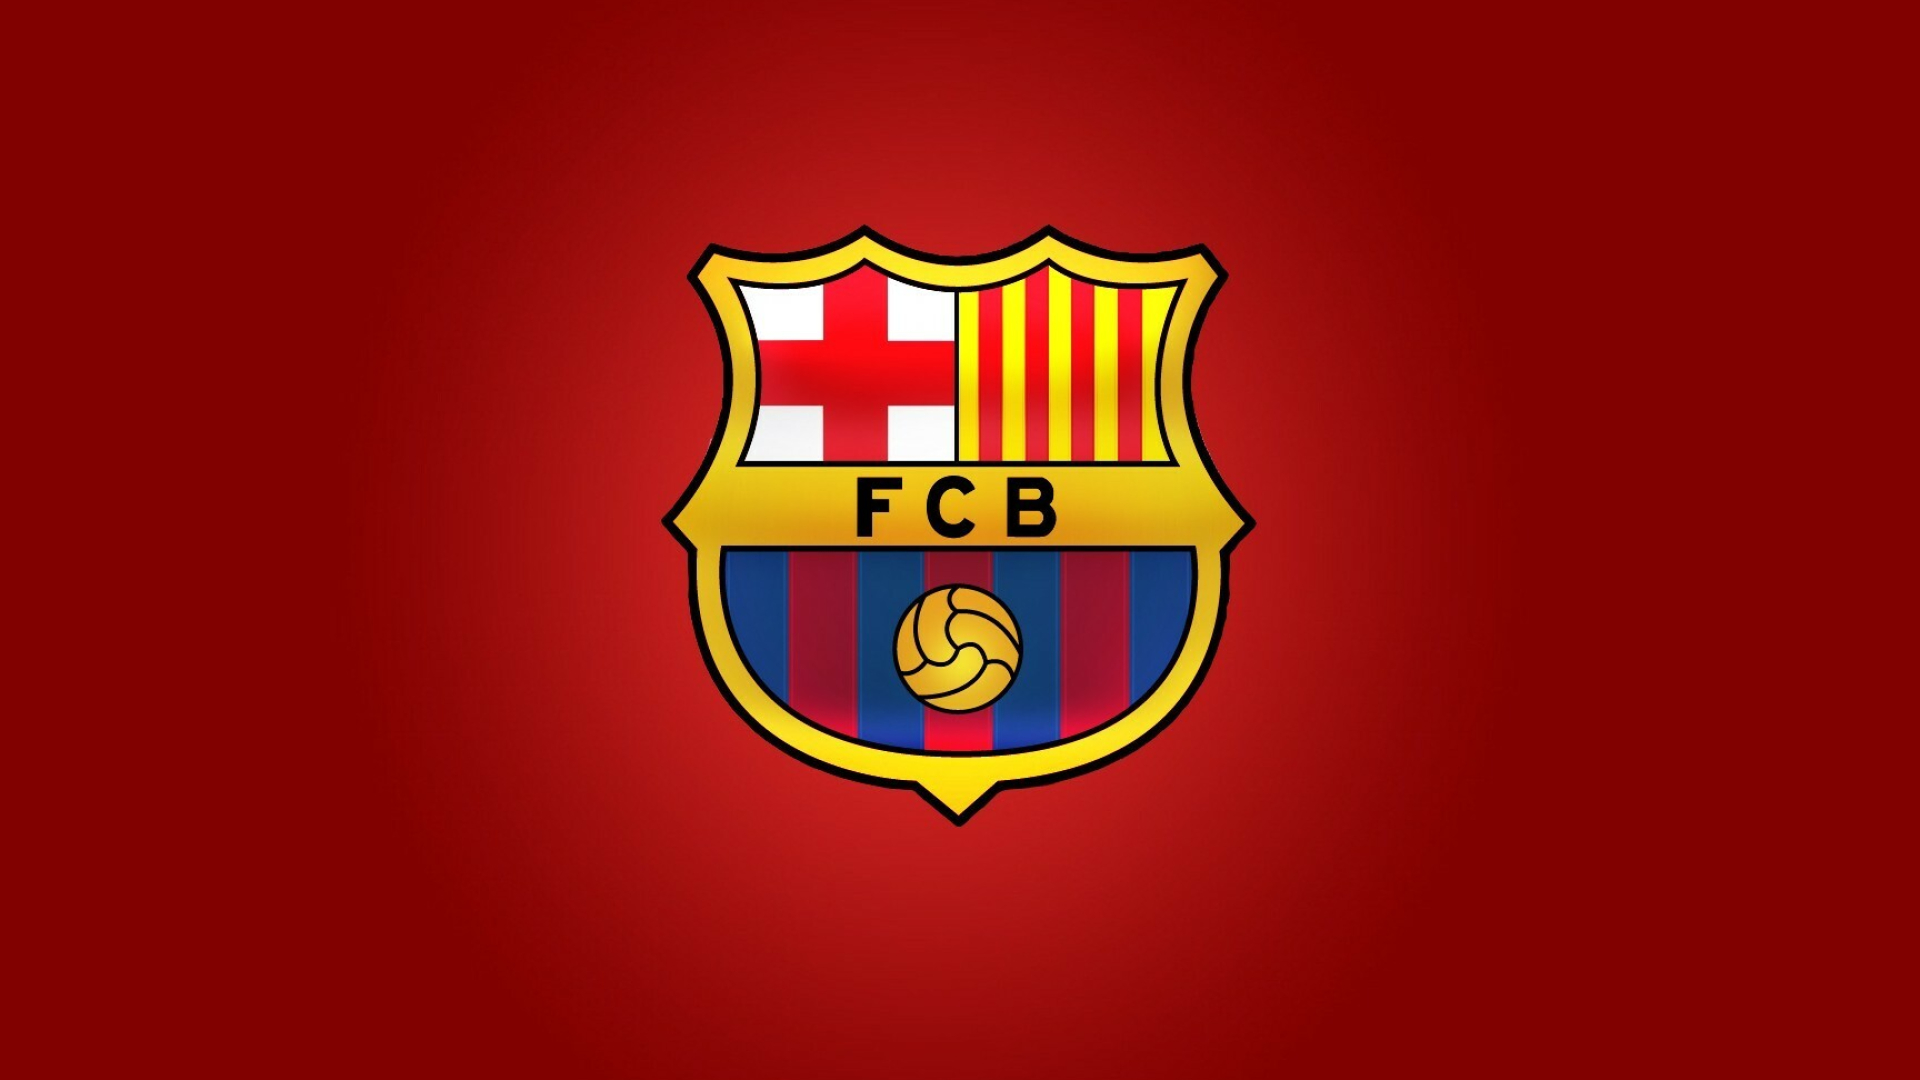 FC Barcelona: The first Spanish club to win the treble consisting of La Liga, Copa del Rey, and the UEFA Champions League, 2009. 1920x1080 Full HD Wallpaper.